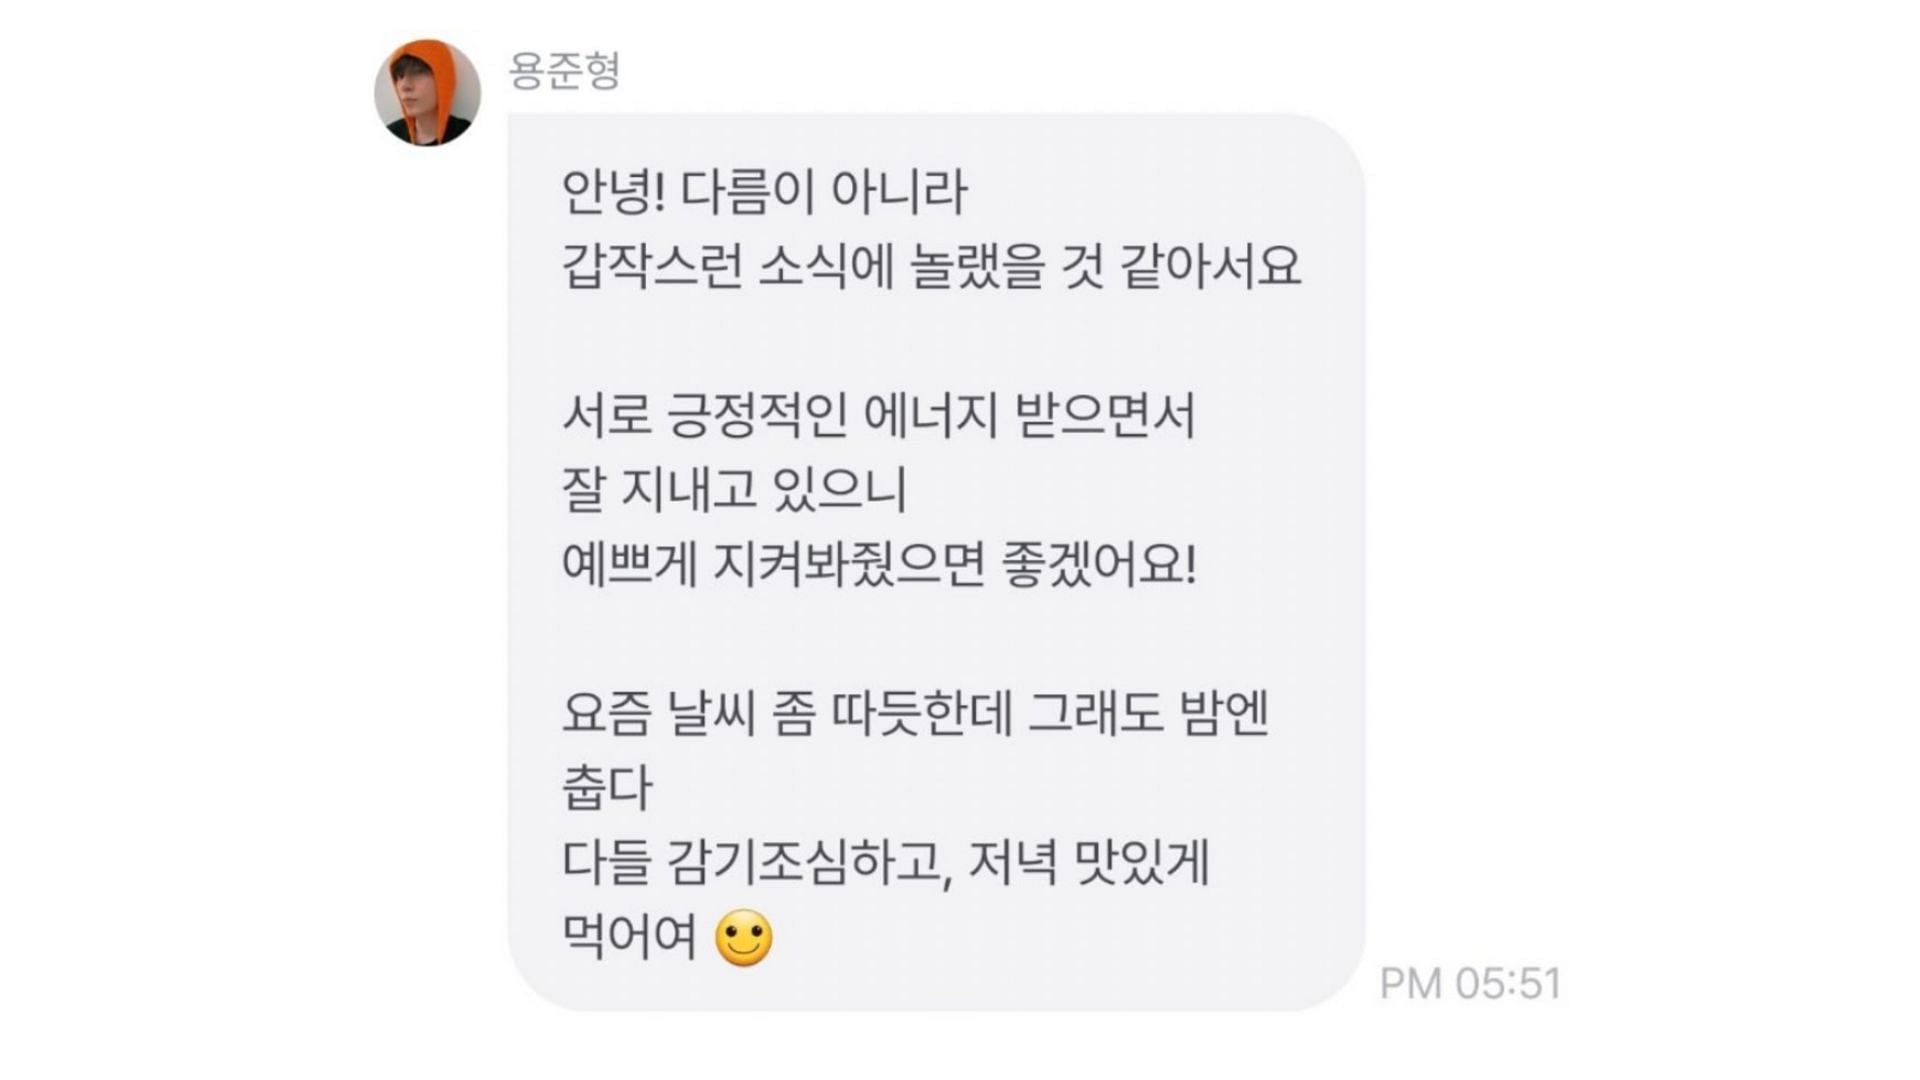 Yong Jun-hyun's message on Fromm